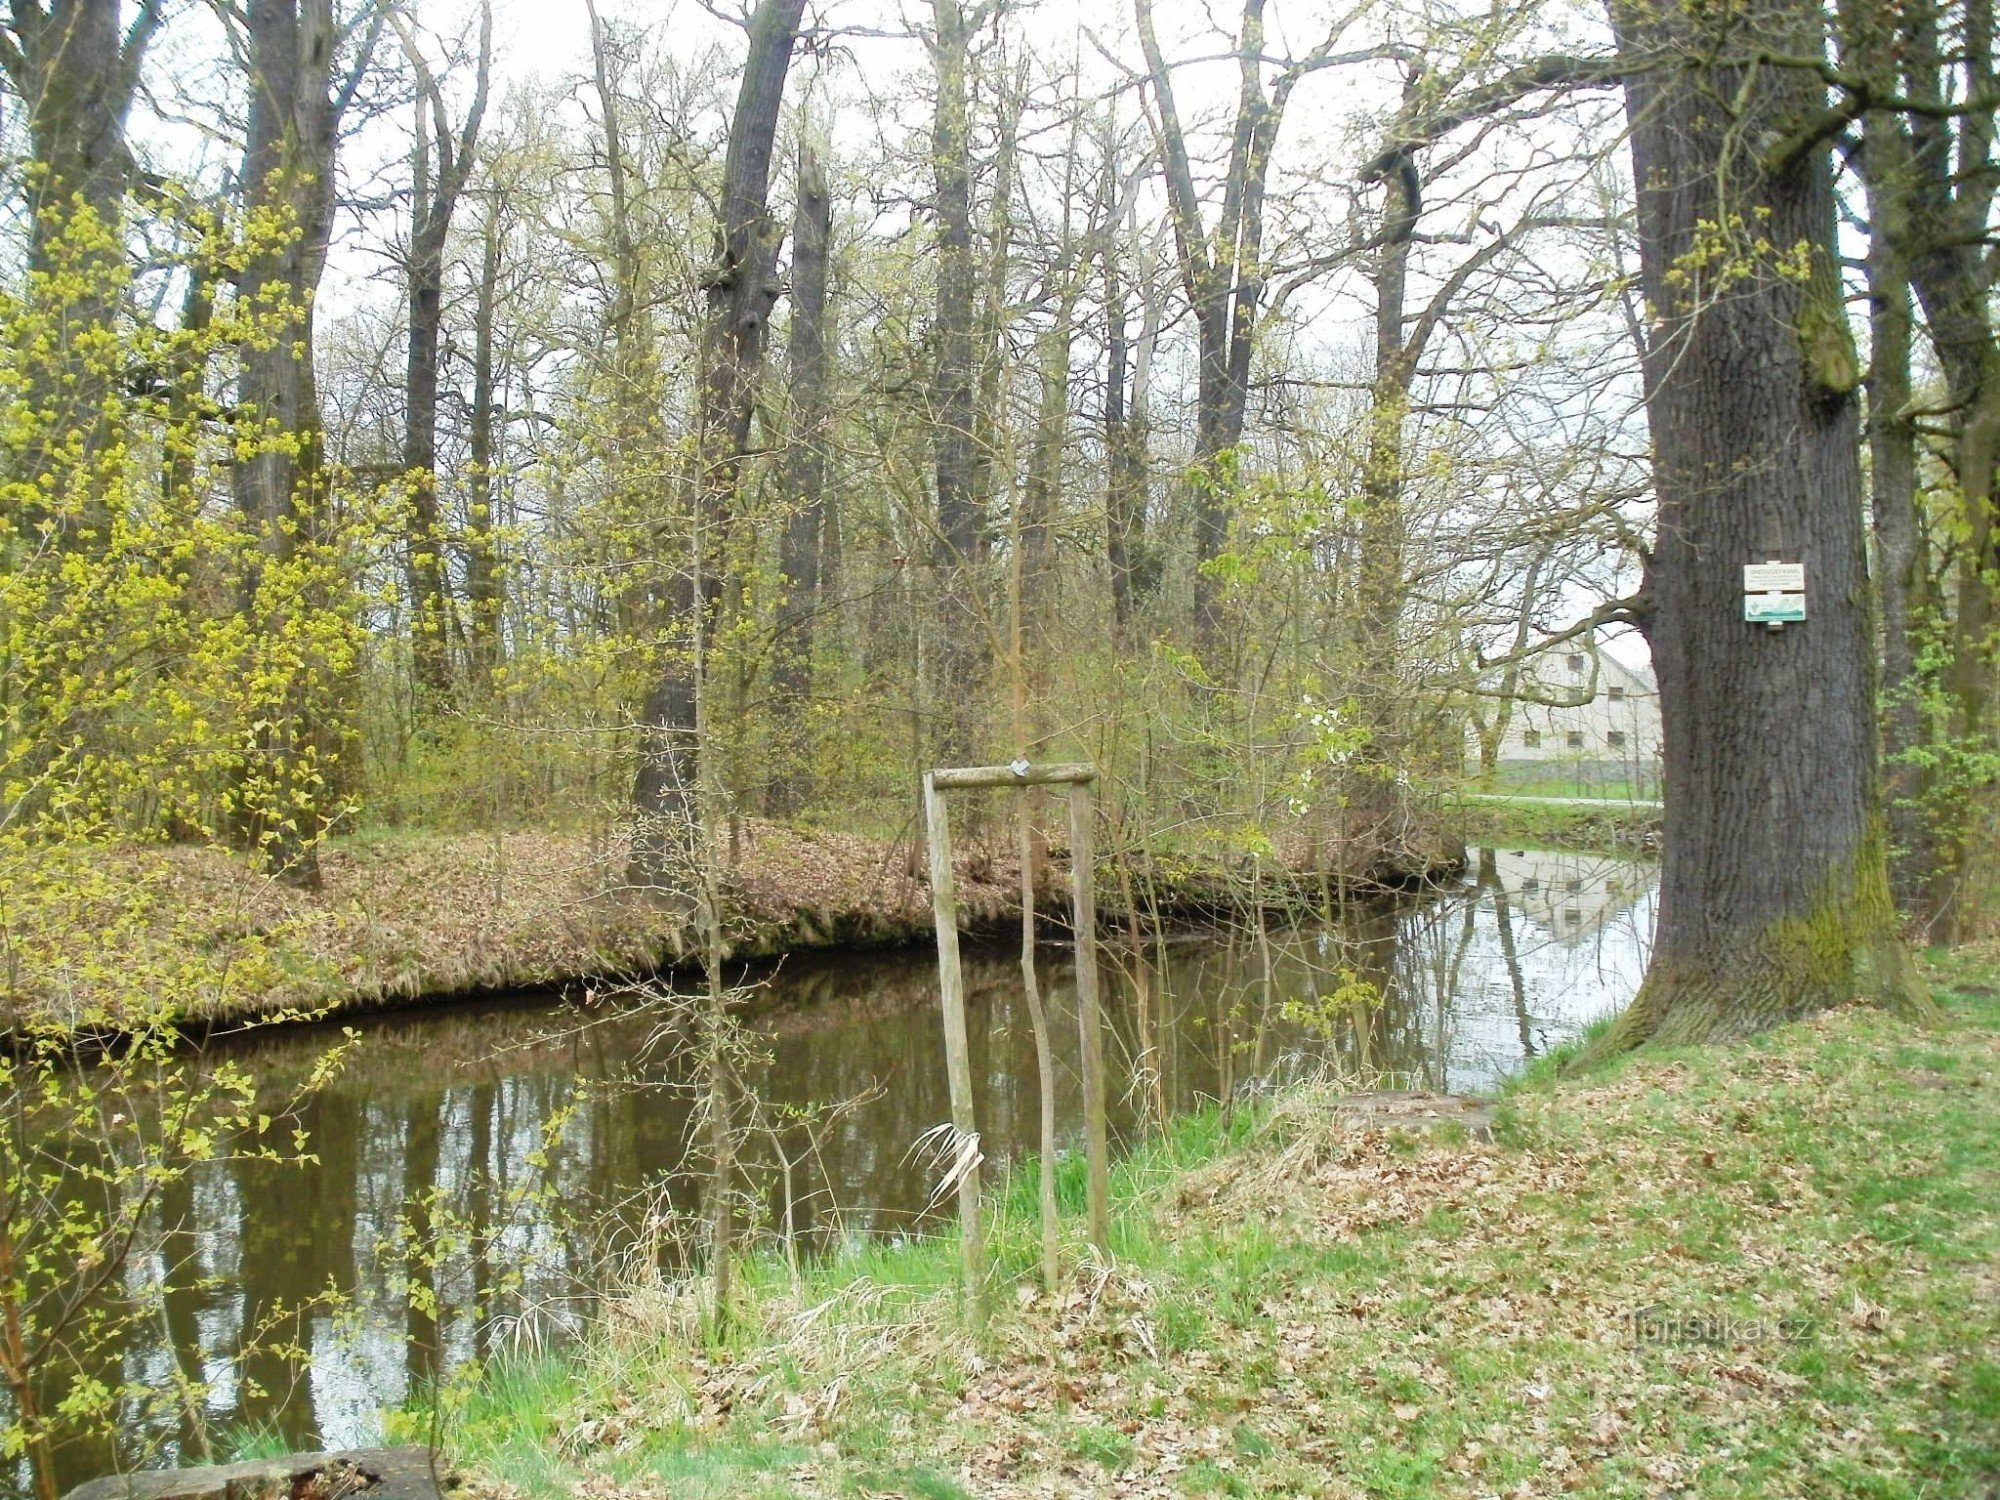 turističko raskrižje Lázně Bohdaneč - kanal Opatovice